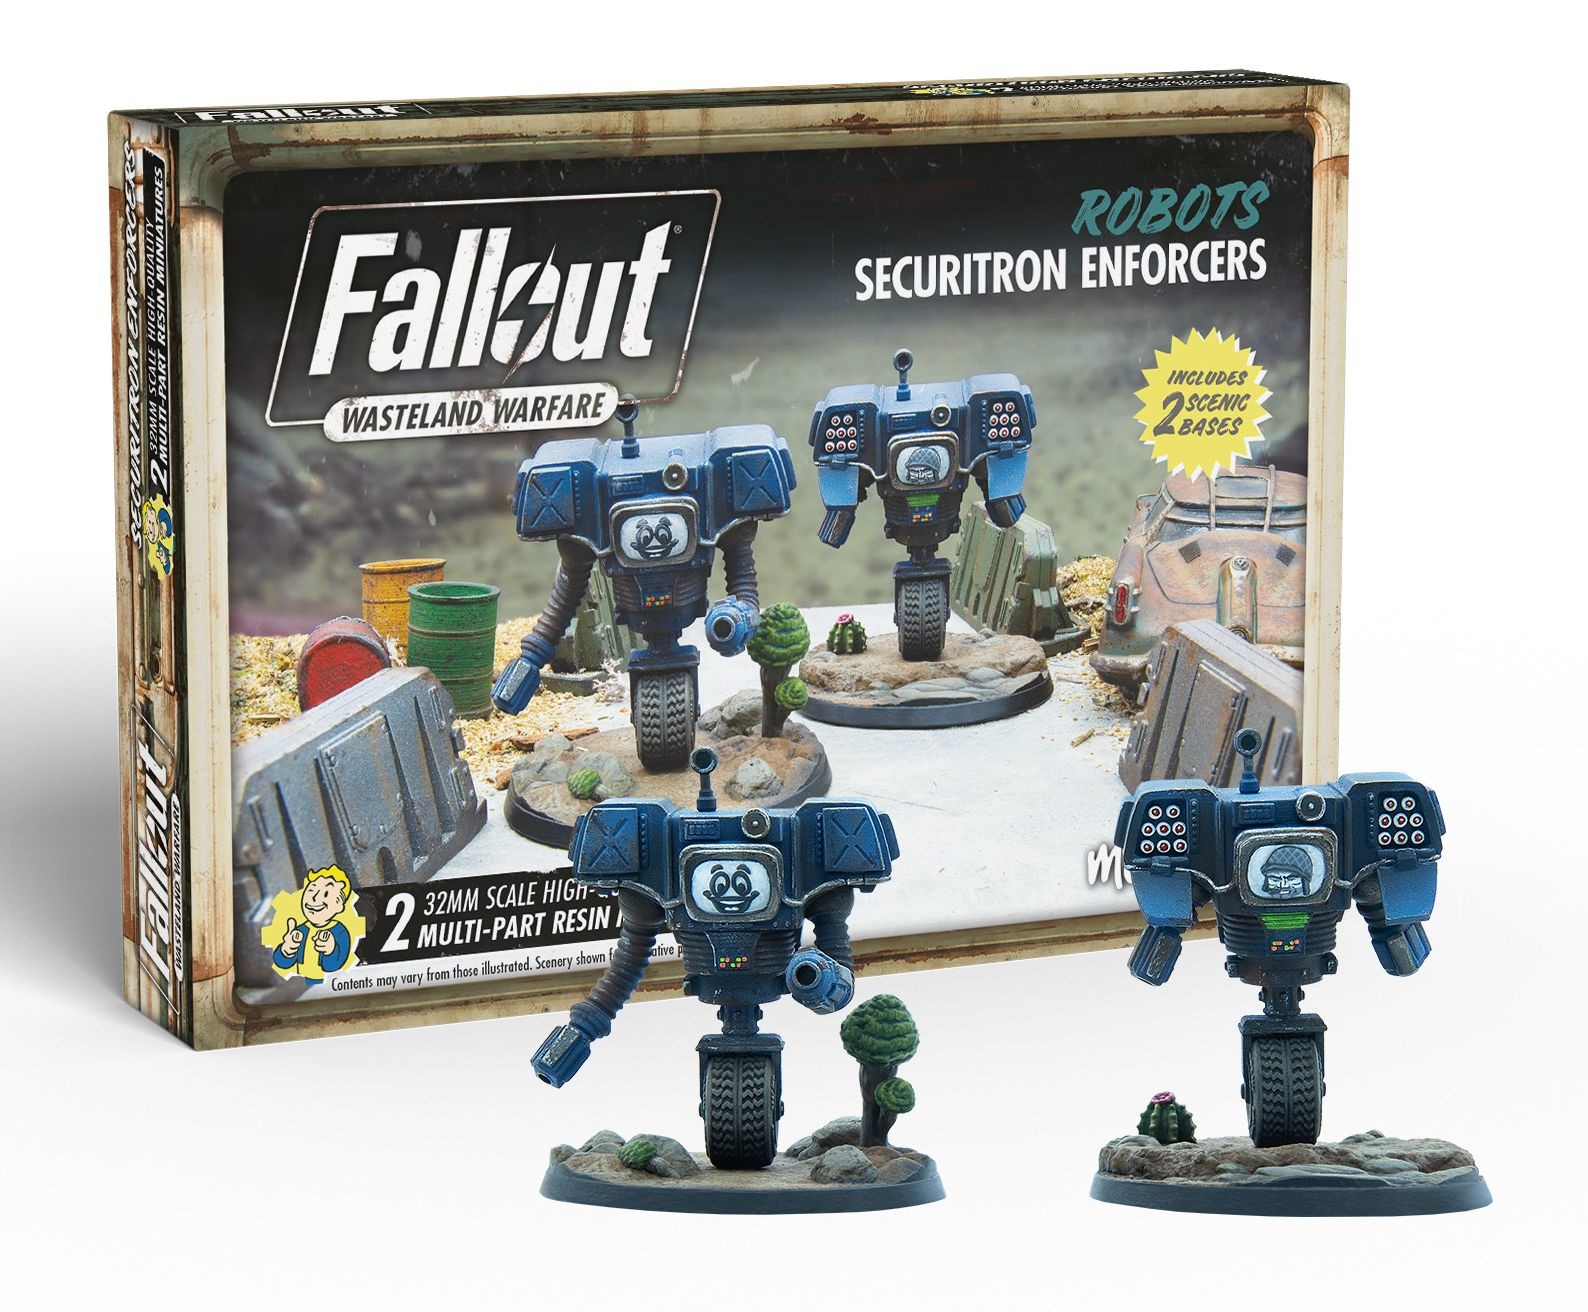 Fallout: Wasteland Warfare: Robots SECURITRON ENFORCERS 